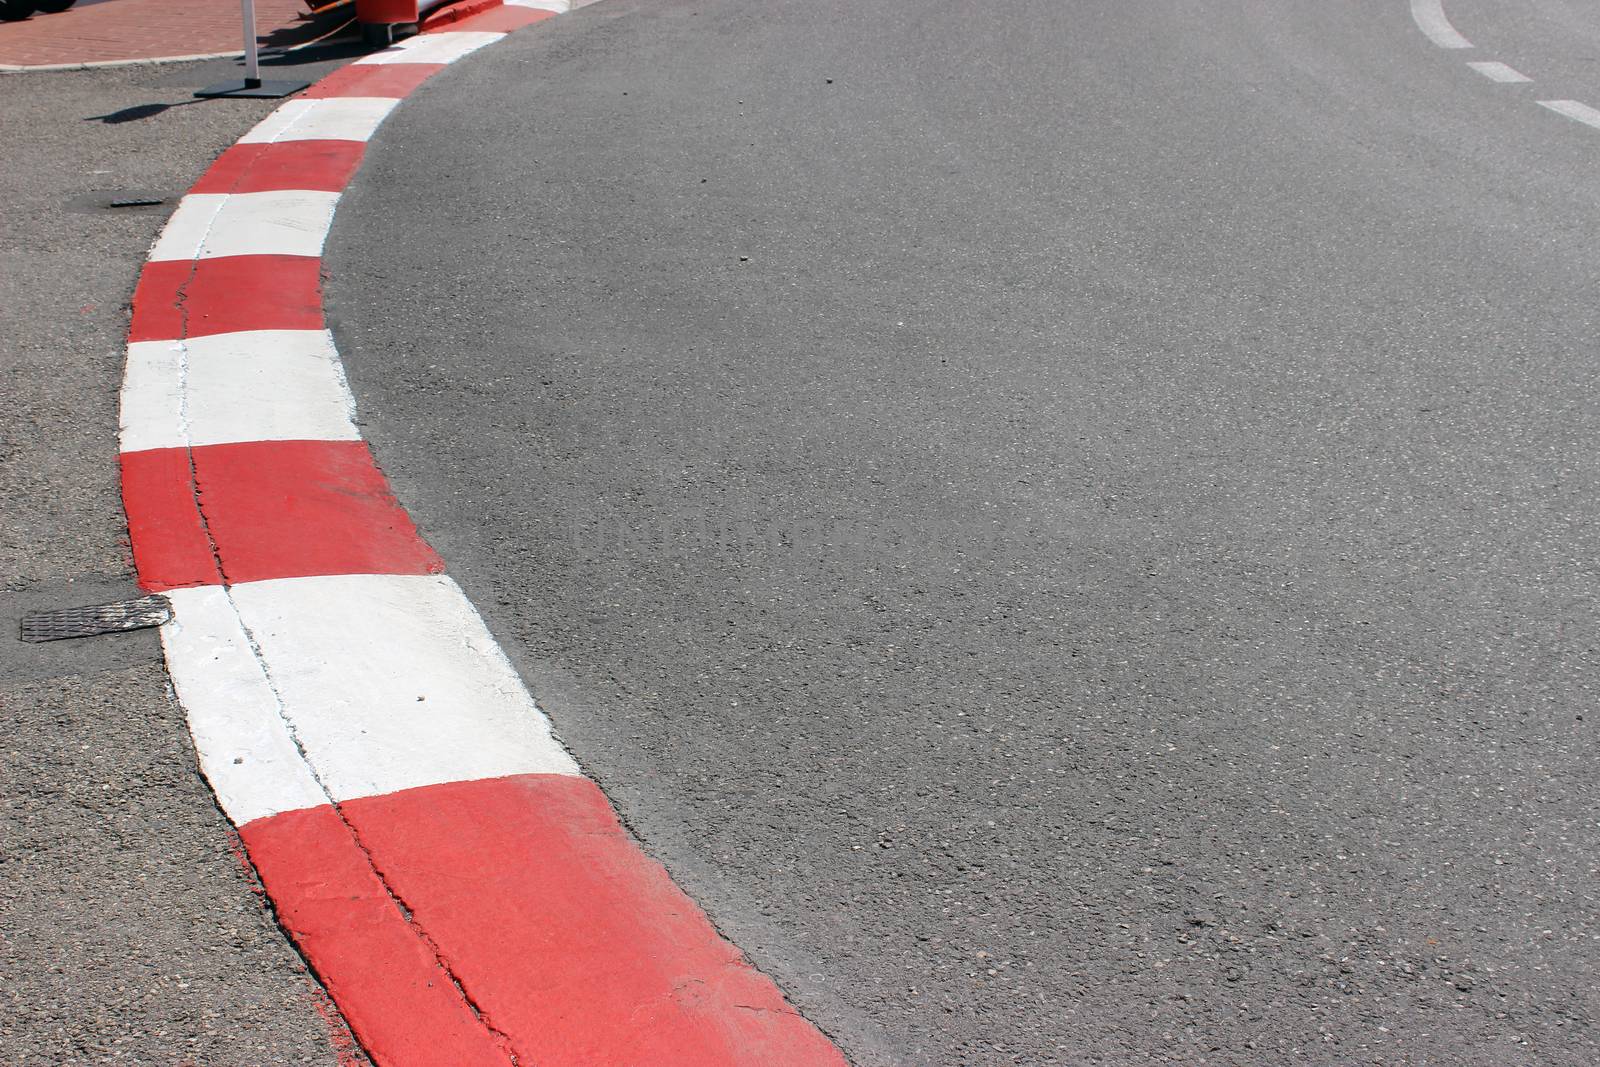 Texture of Motor Race Asphalt and Curb on Monaco GP by bensib